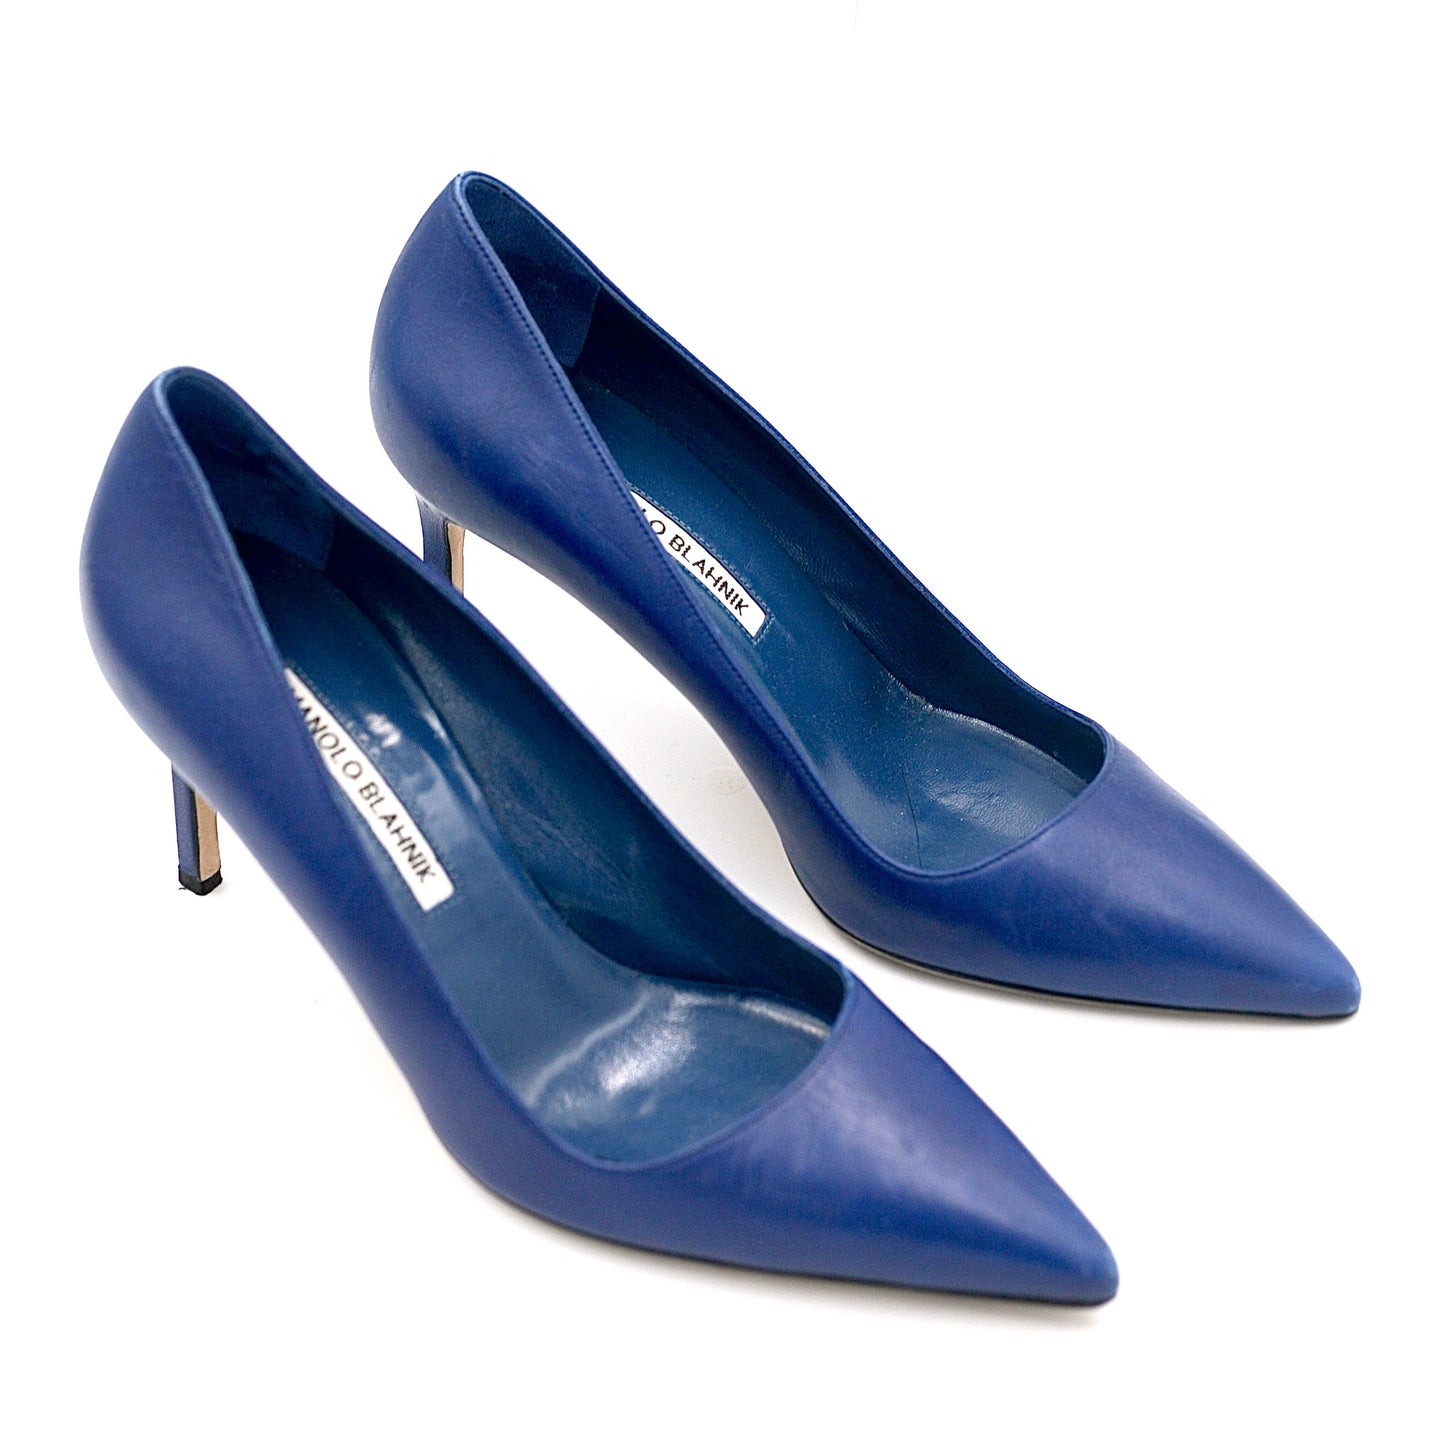 Manolo Blahnik blue heels